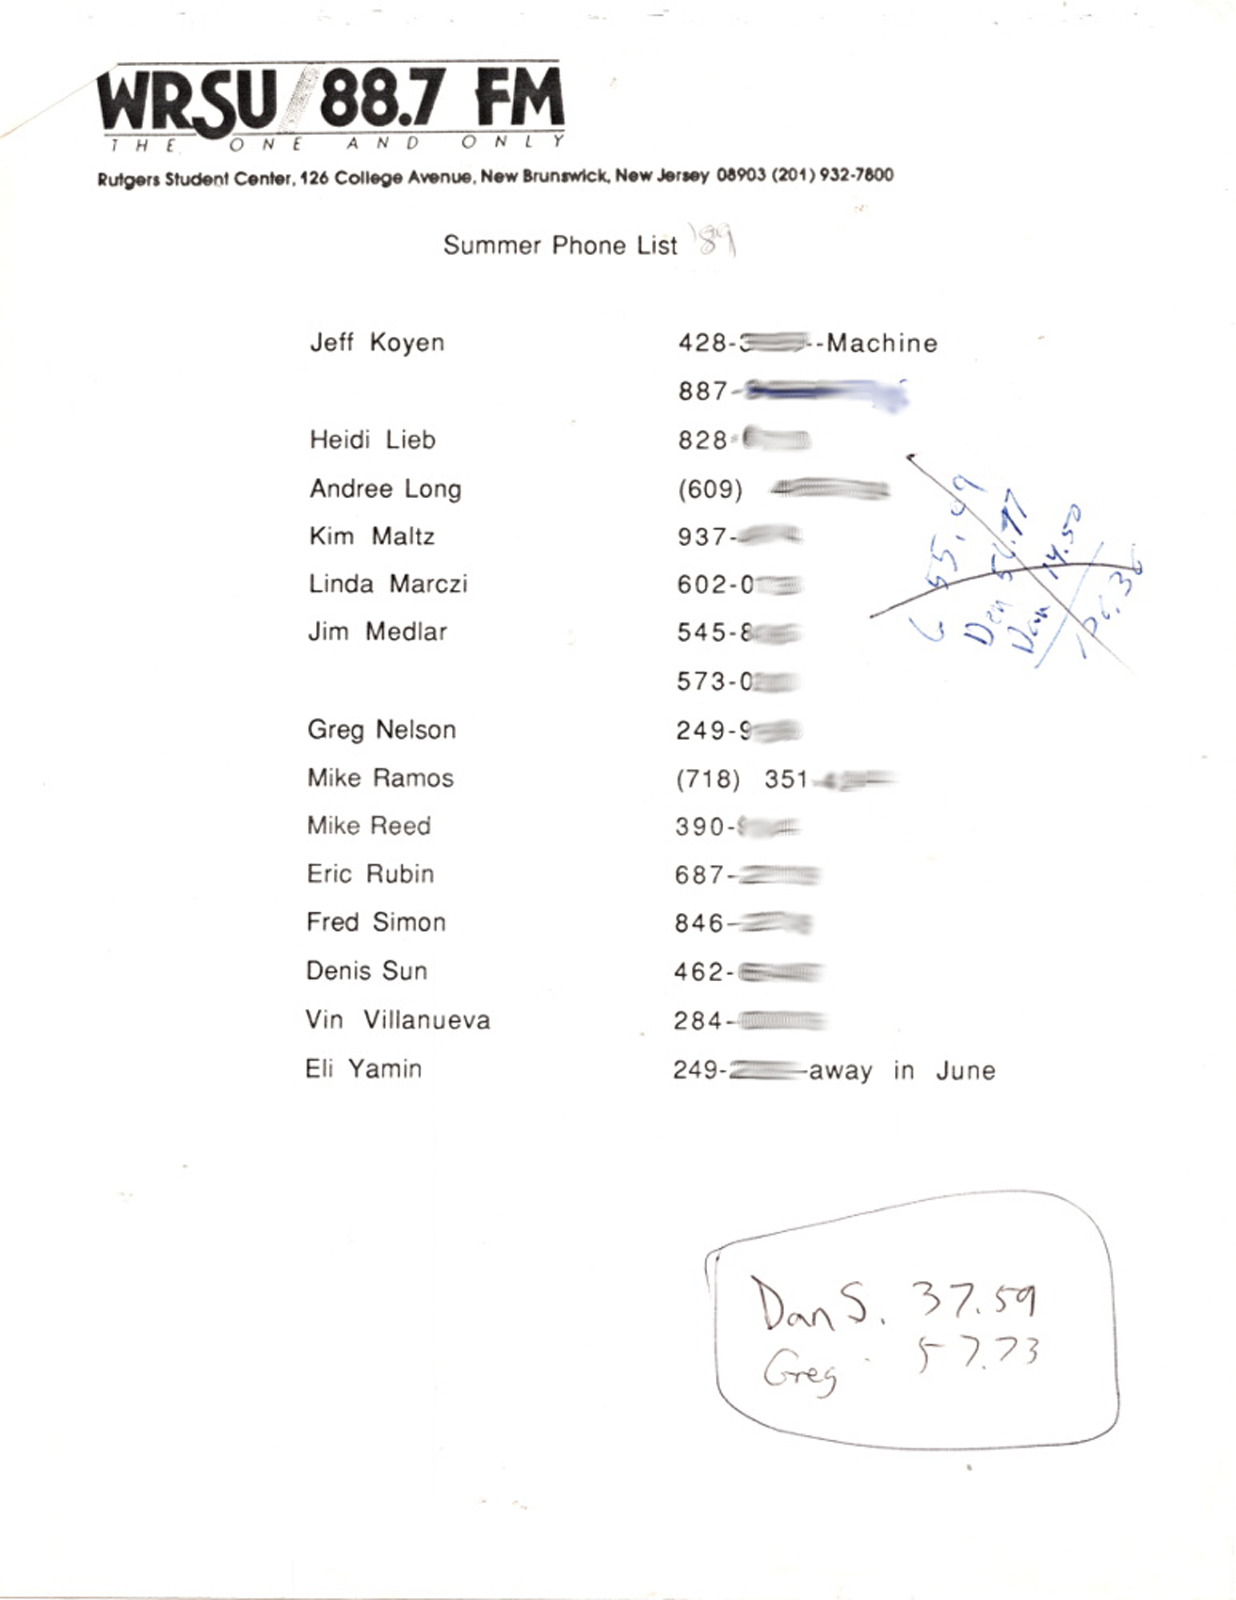 1989 - Summer Phone List